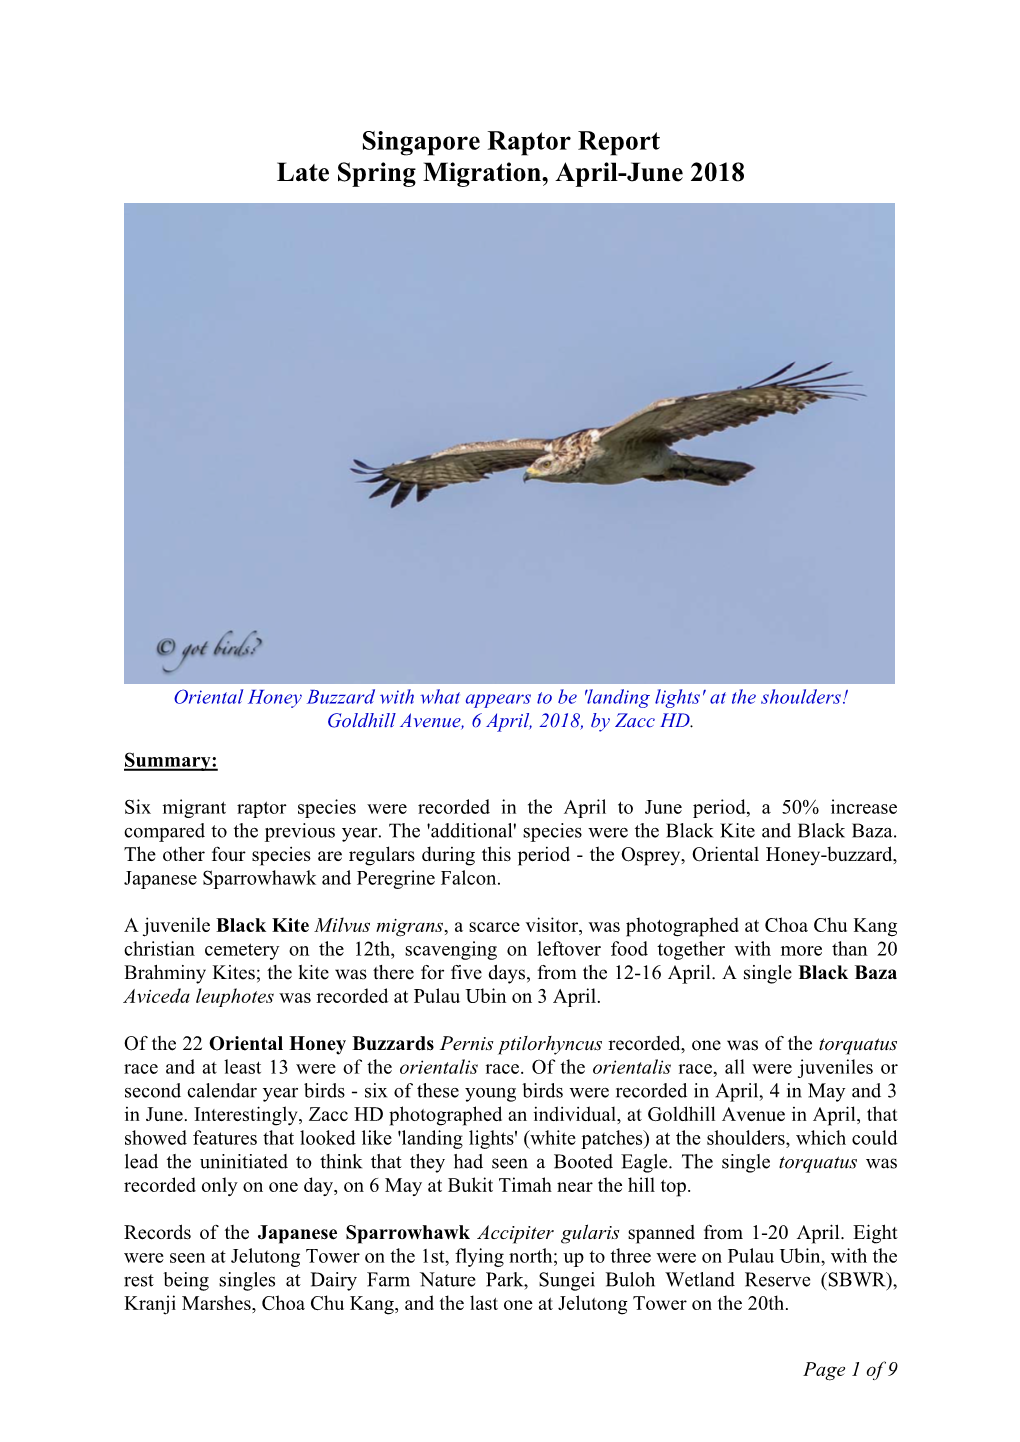 Singapore Raptor Report, Late Spring Migration, Apr-Jun 2018, V2